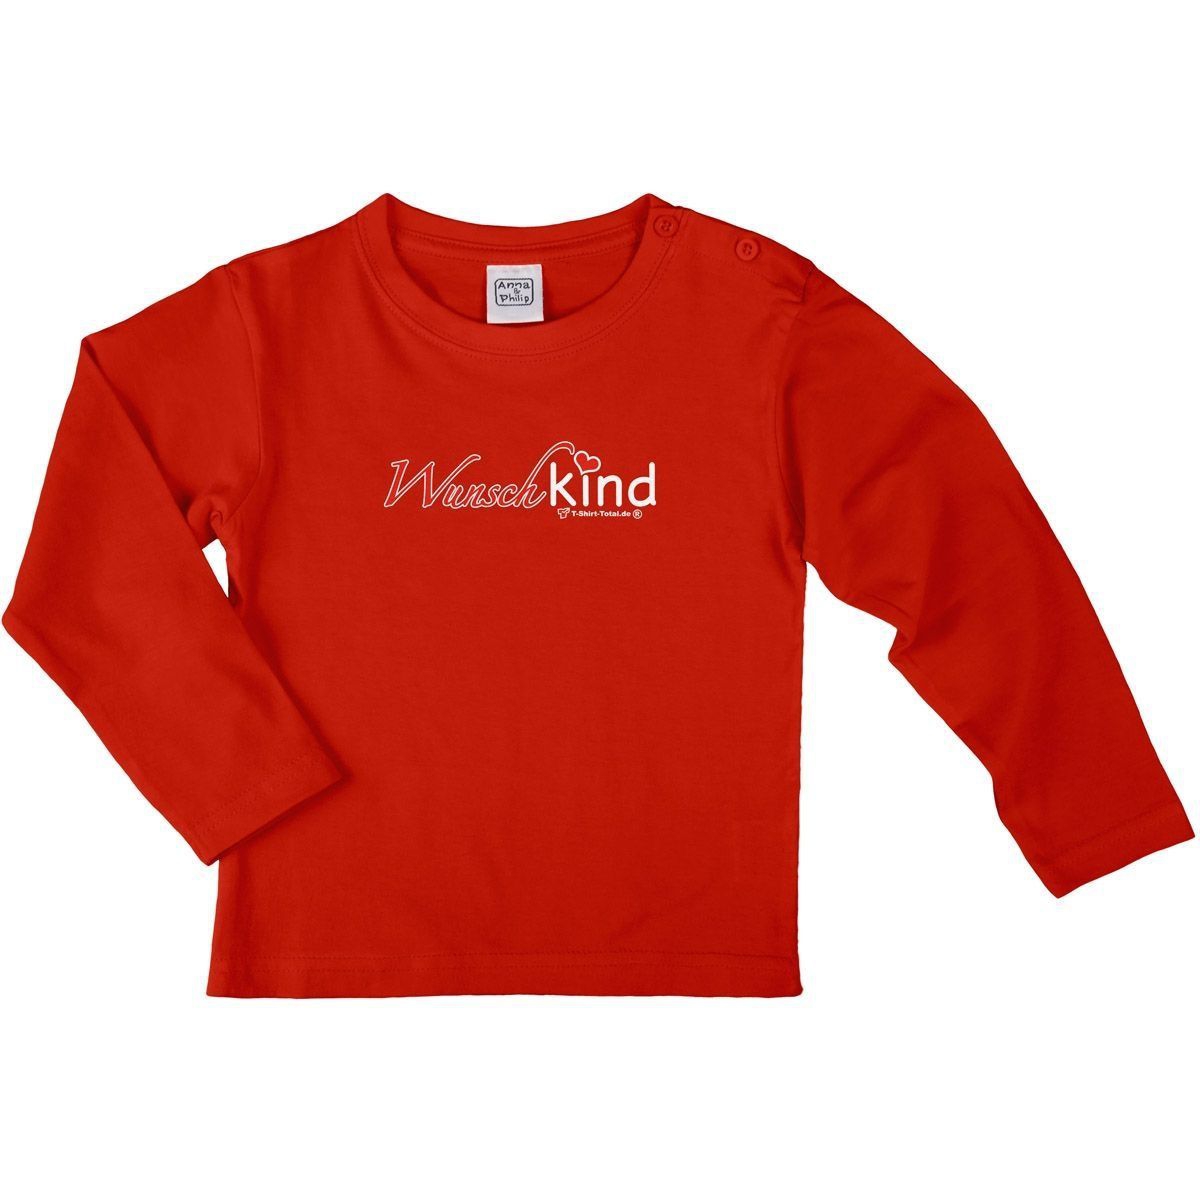 Wunschkind Kinder Langarm Shirt rot 56 / 62